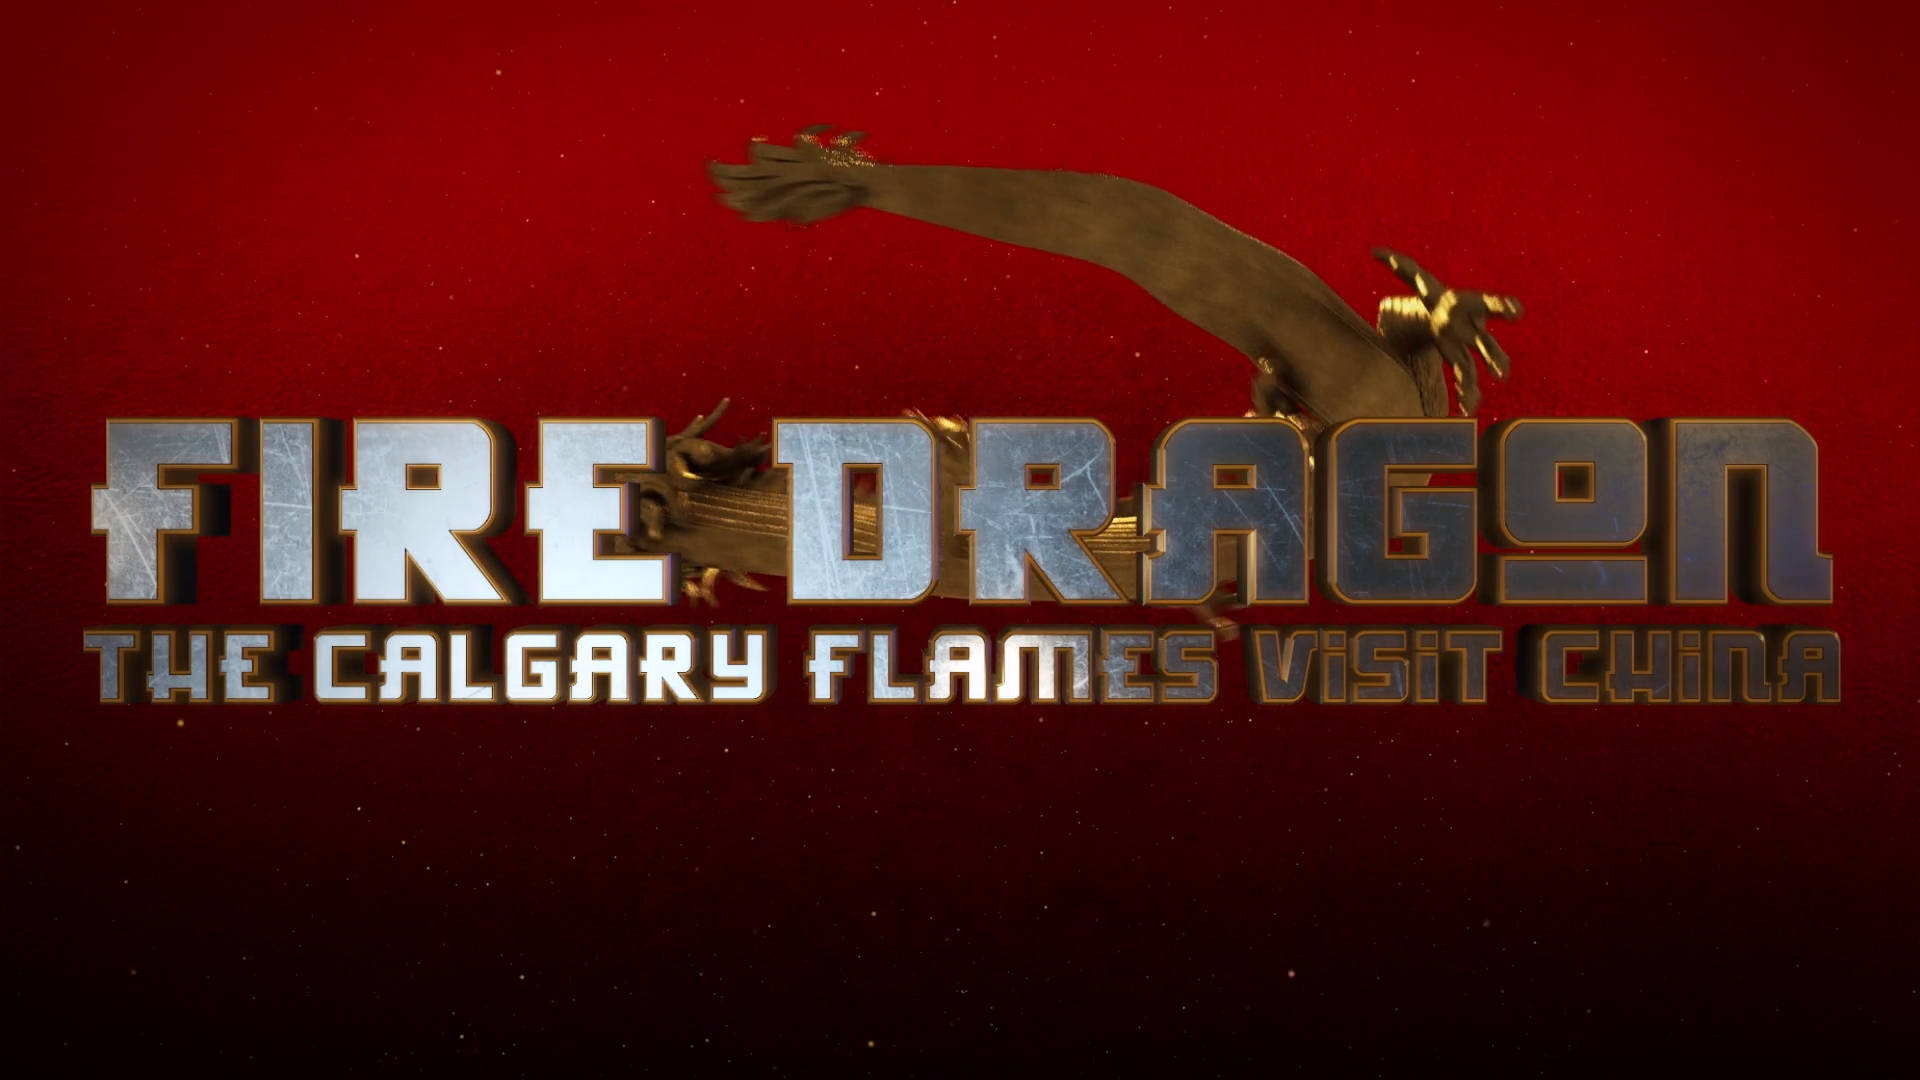 Calgaryflames Feuerdrachen-banner Wallpaper